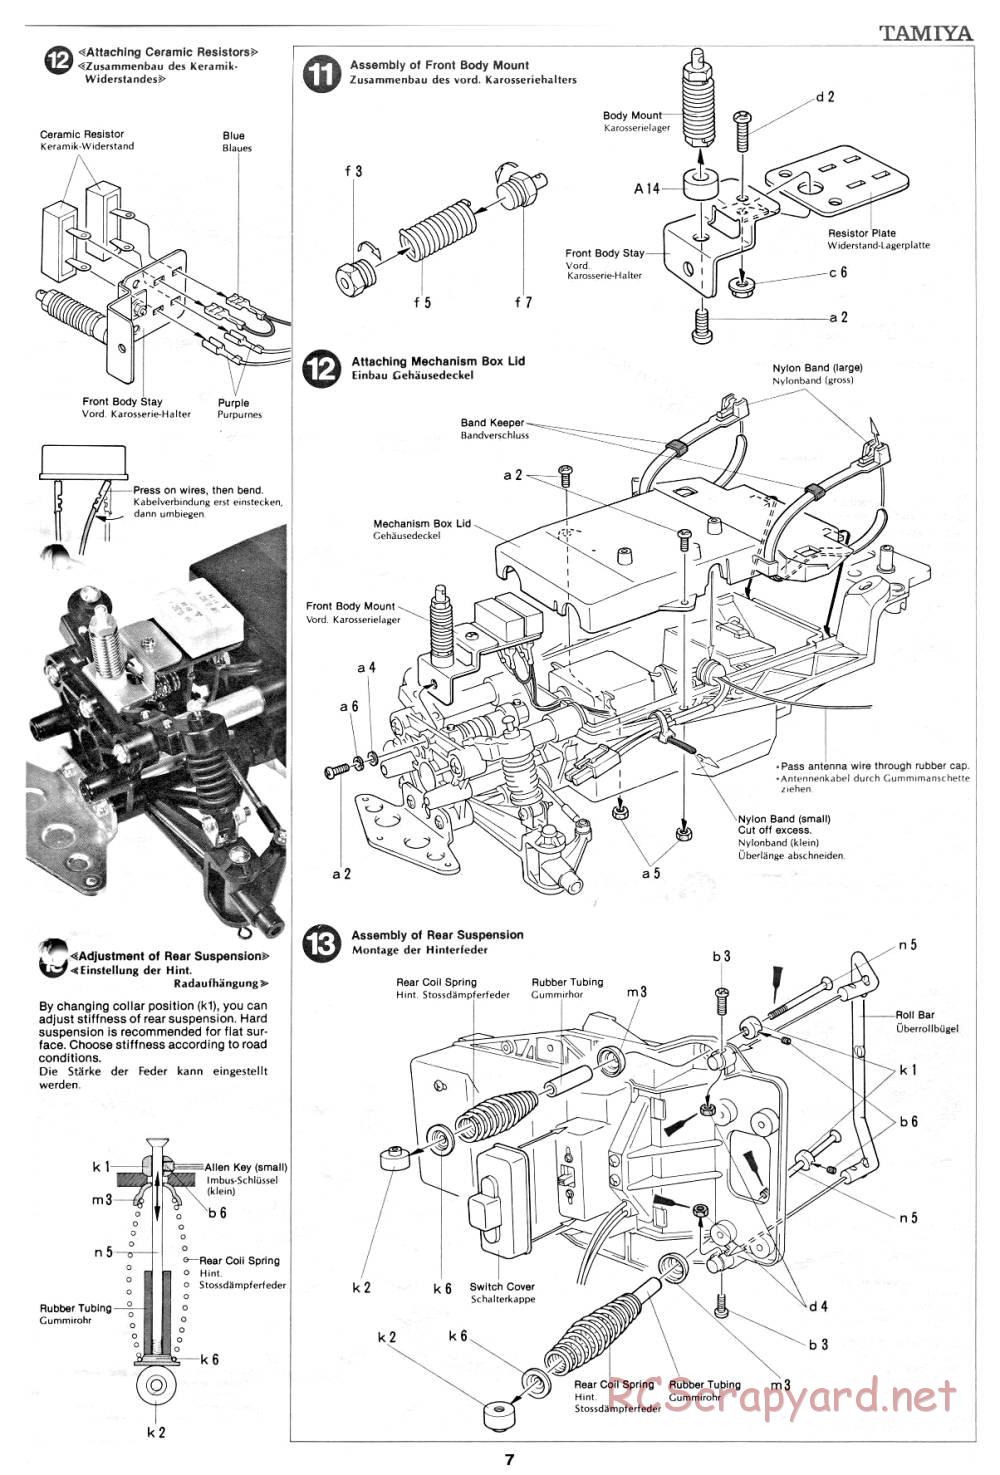 Tamiya - Opel Ascona 400 Rally - 58037 - Manual - Page 7